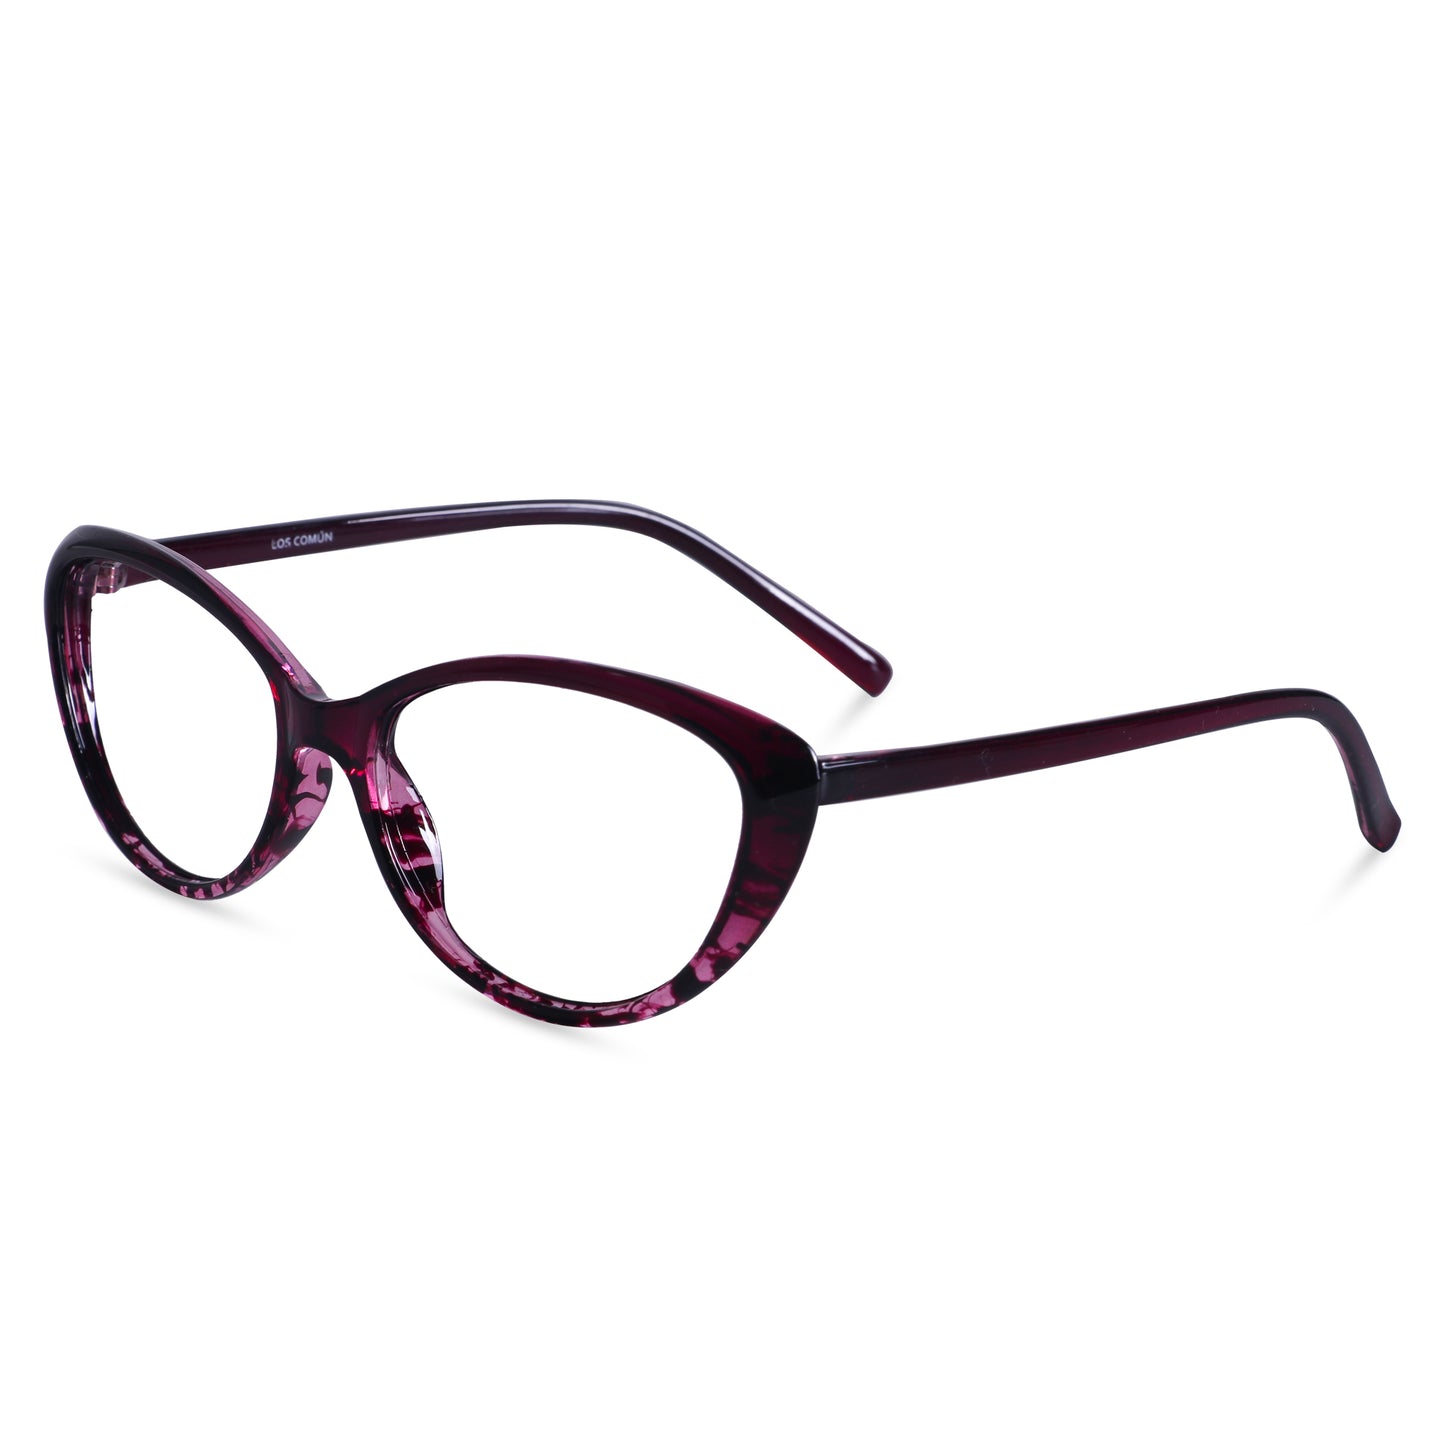 Loscomun Computer Glasses Purple Tortoise Cateye Eyeglasses